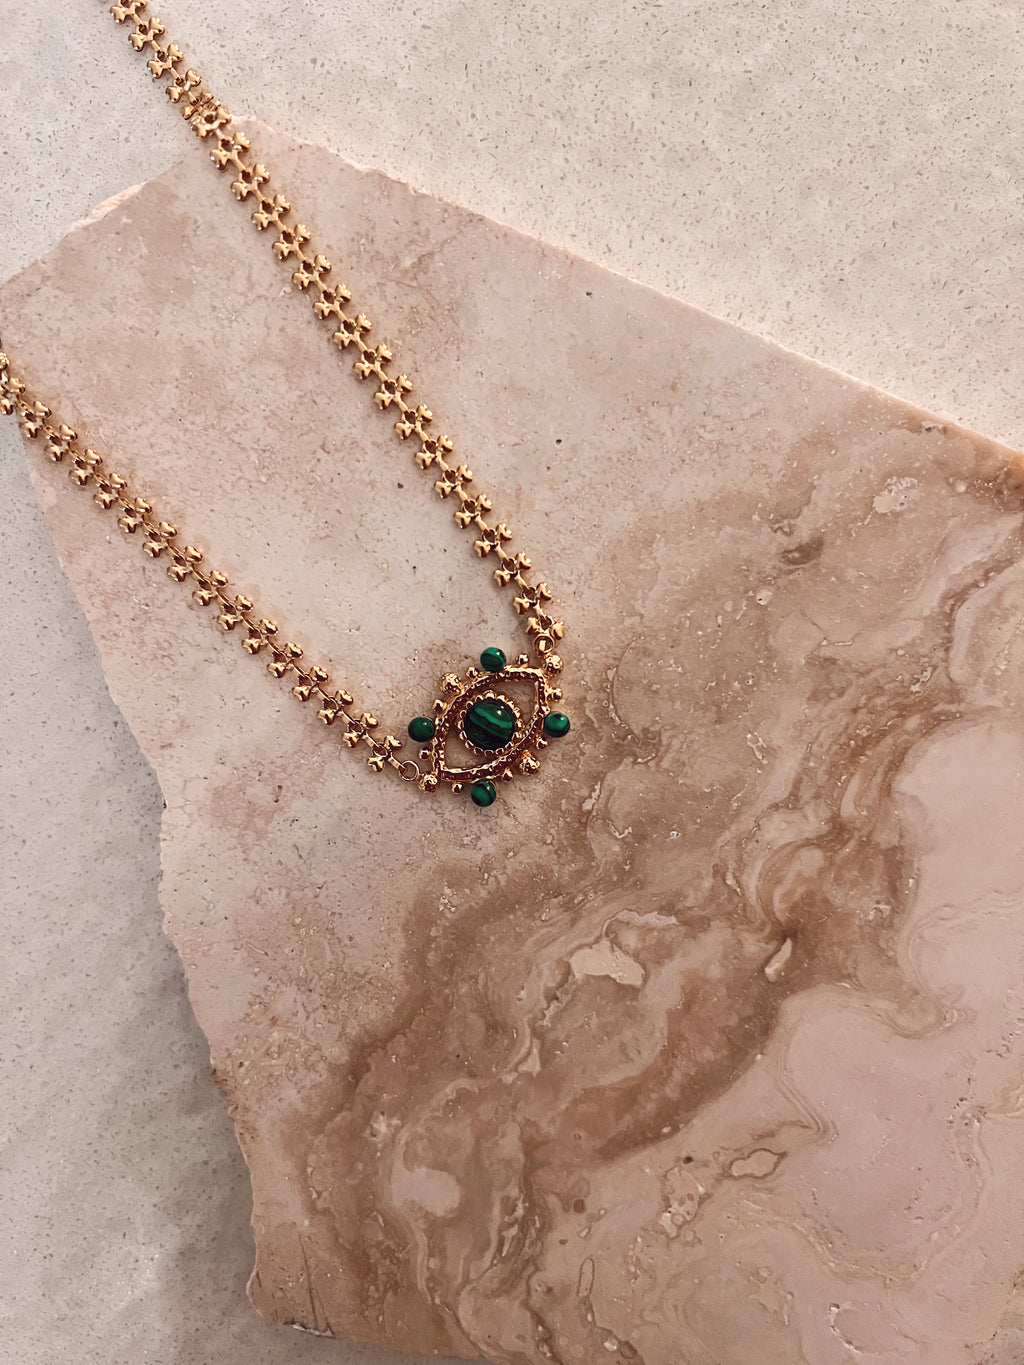 Emerald eye necklace